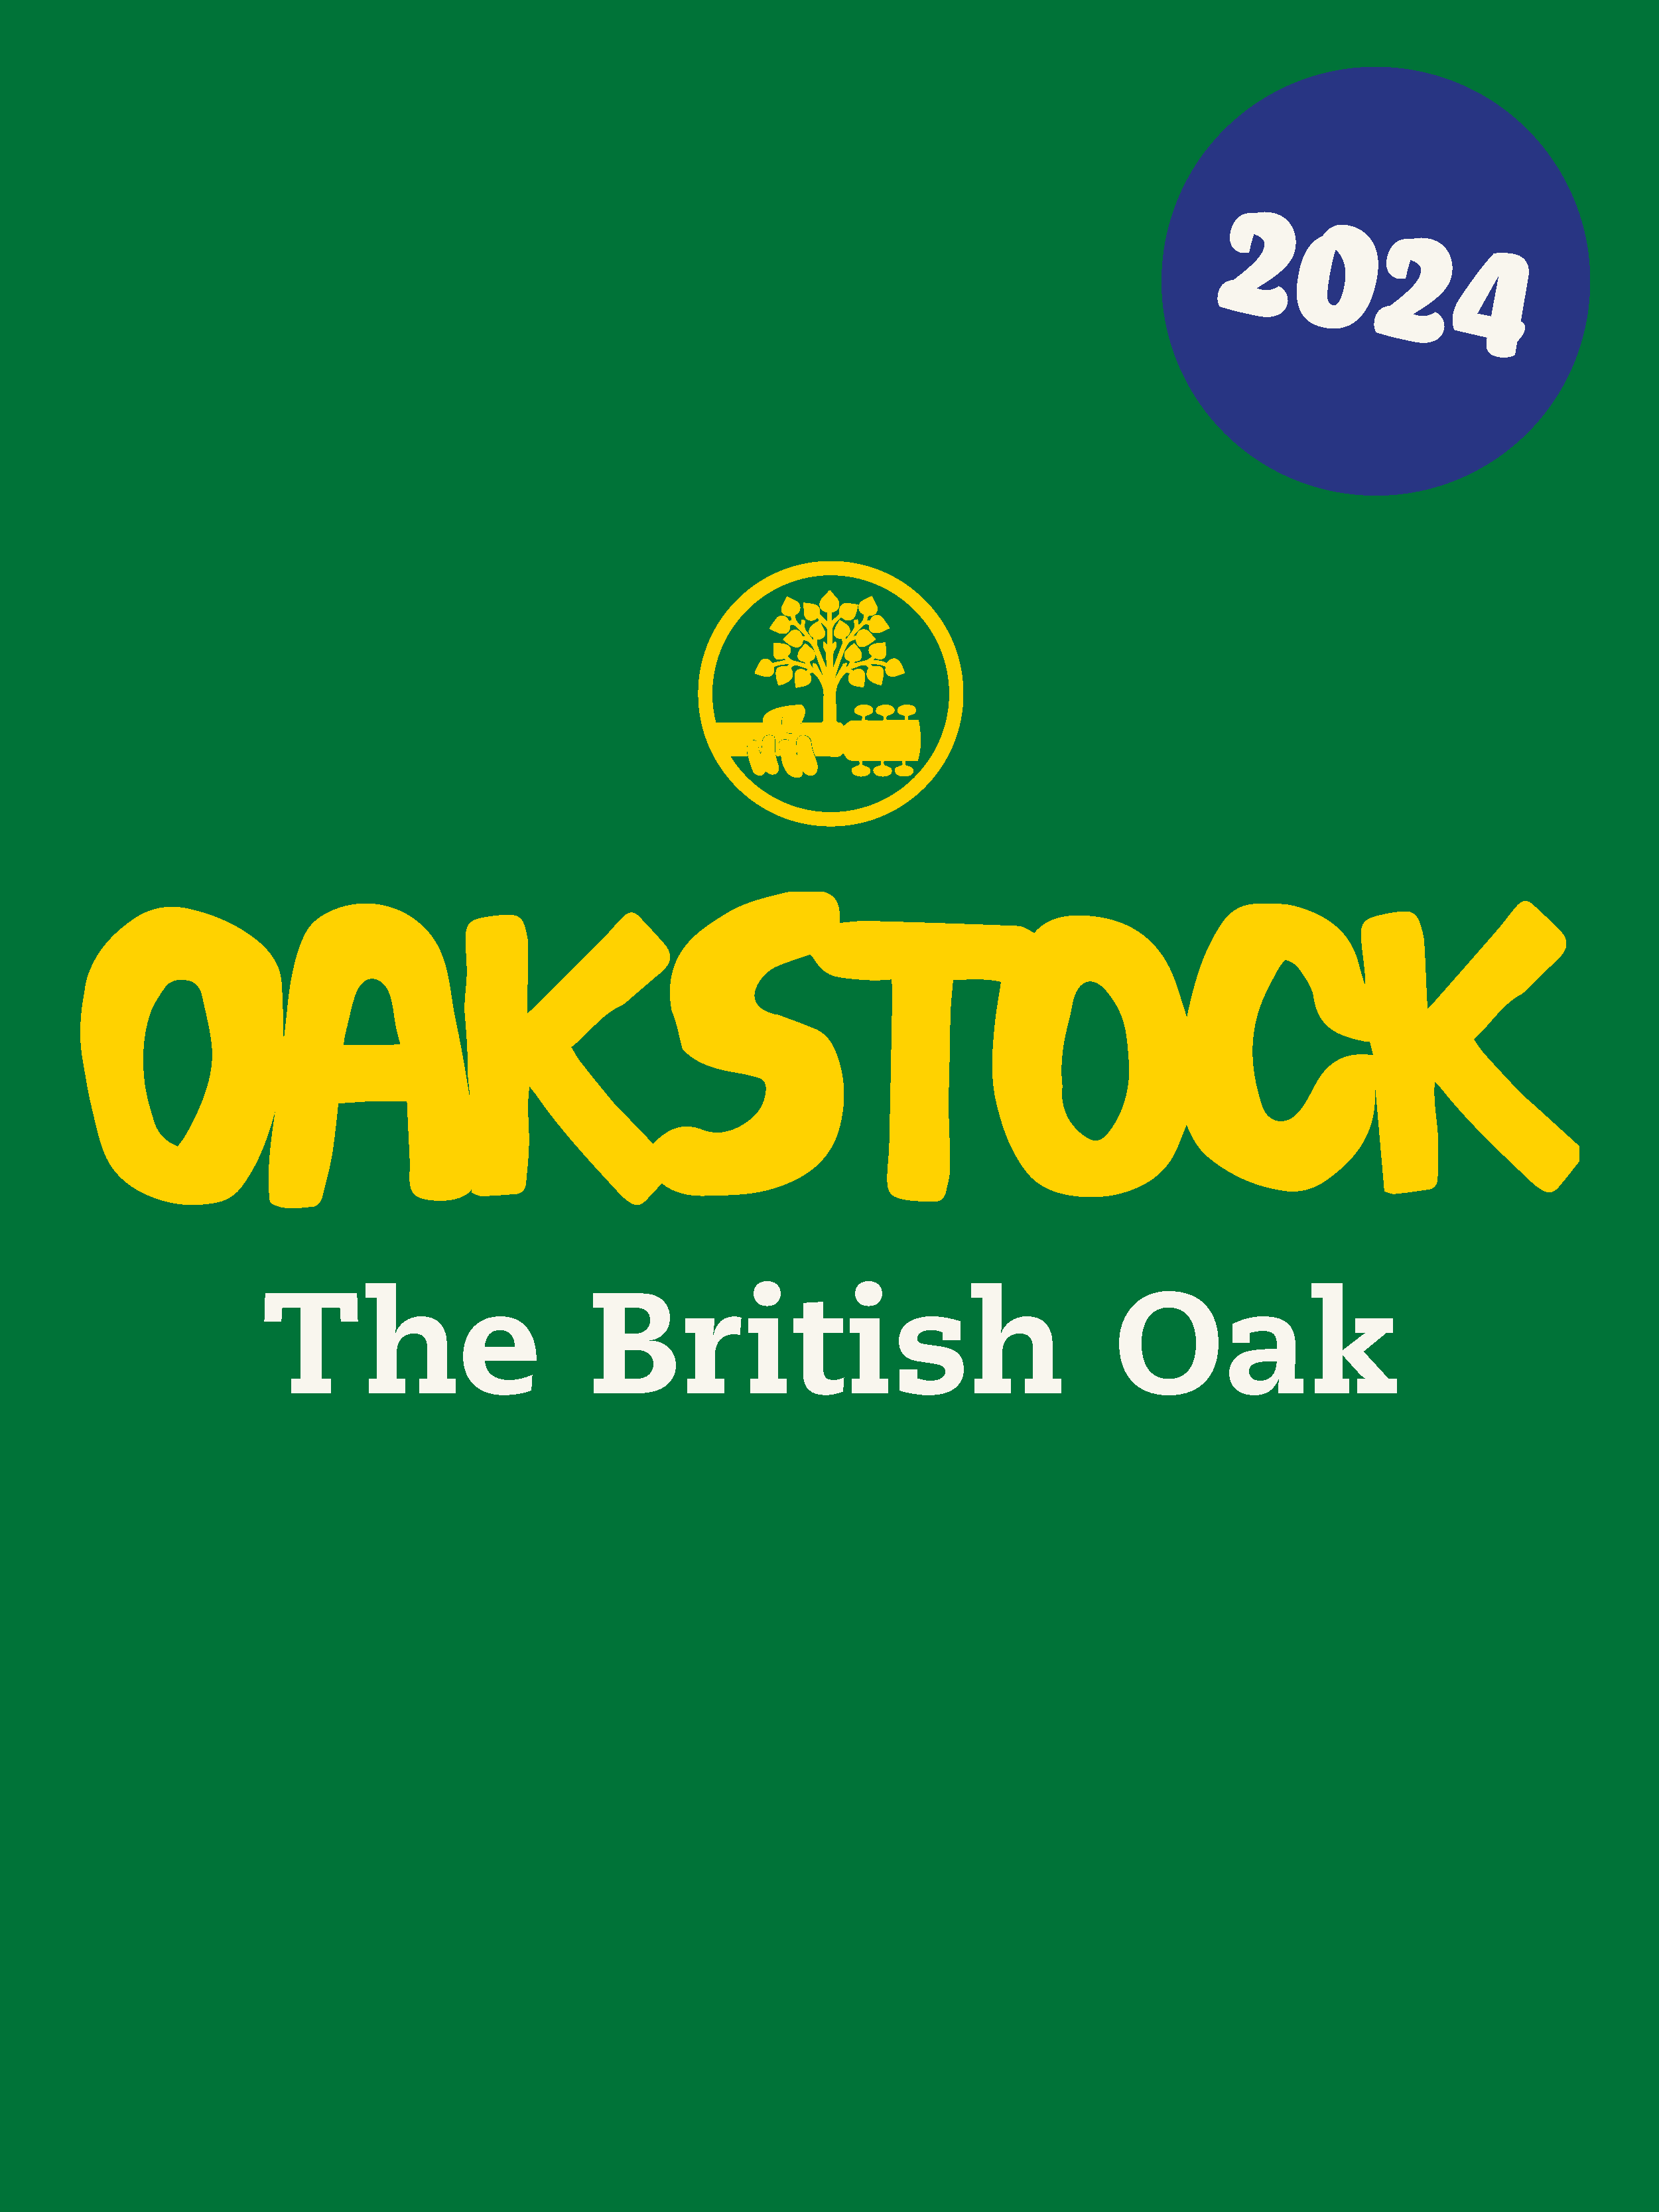 BO Oakstock Whats On